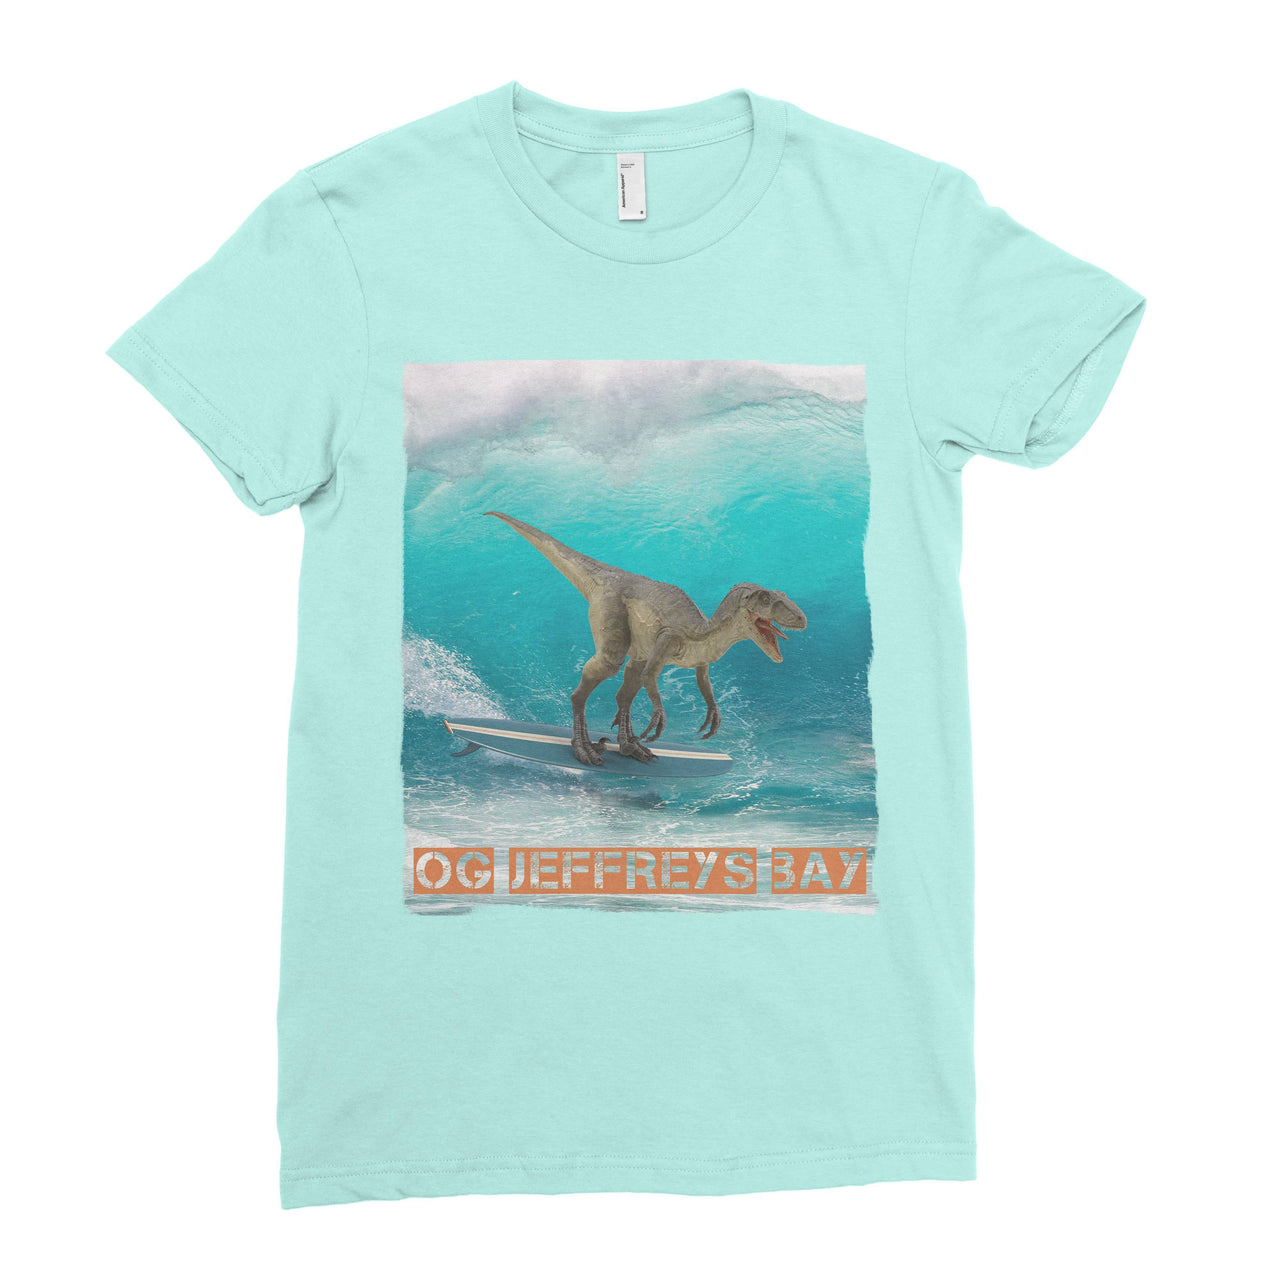 dinosaur surfing t-shirt